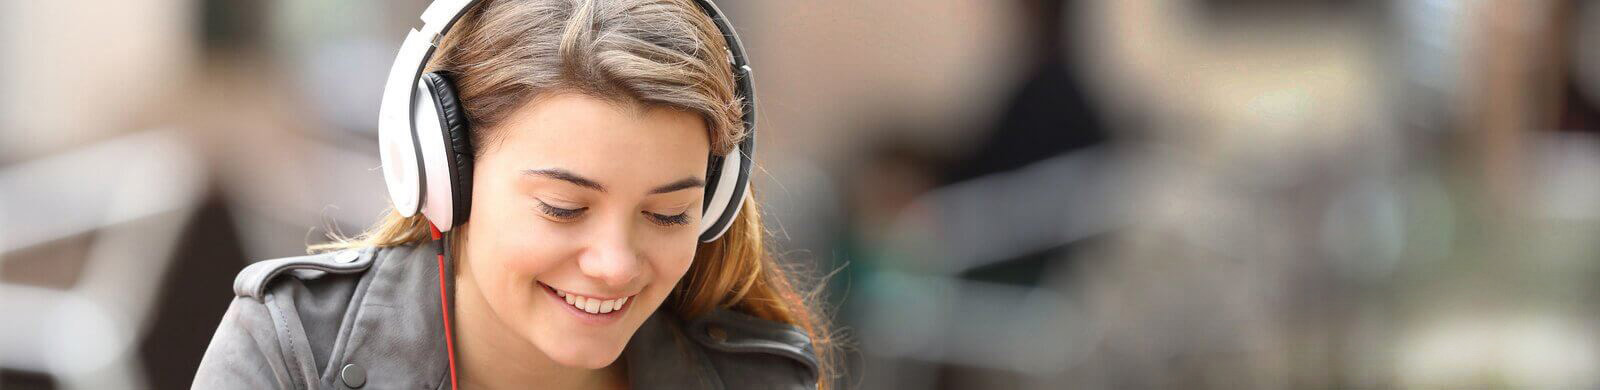 Slider: Junge Frau mit Kopfhörer